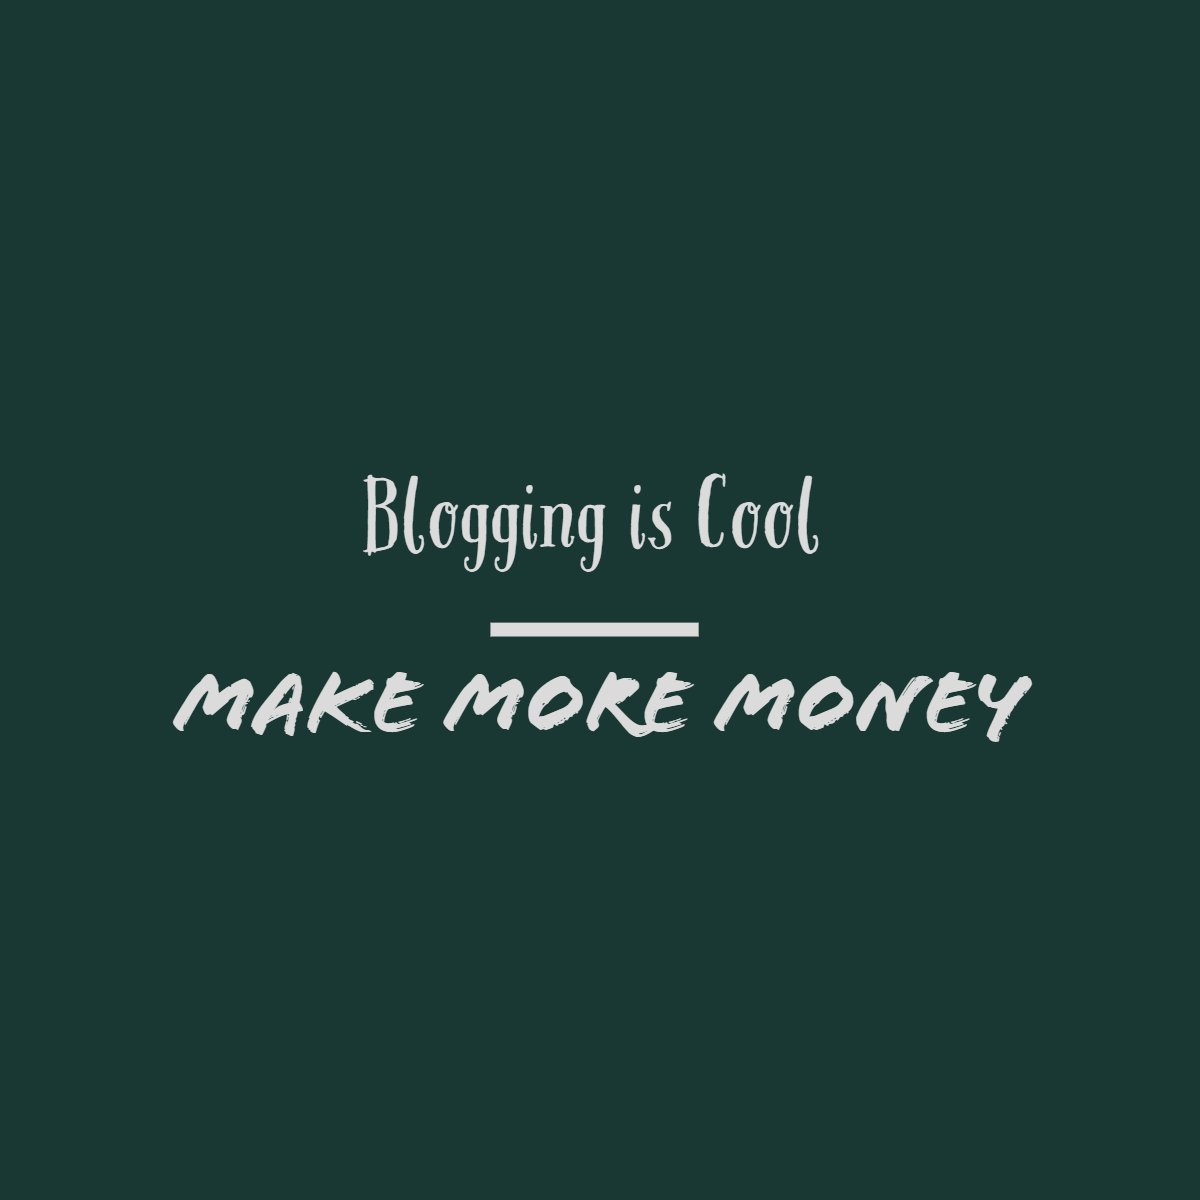 bloggingiscool.com user generated content for your blog